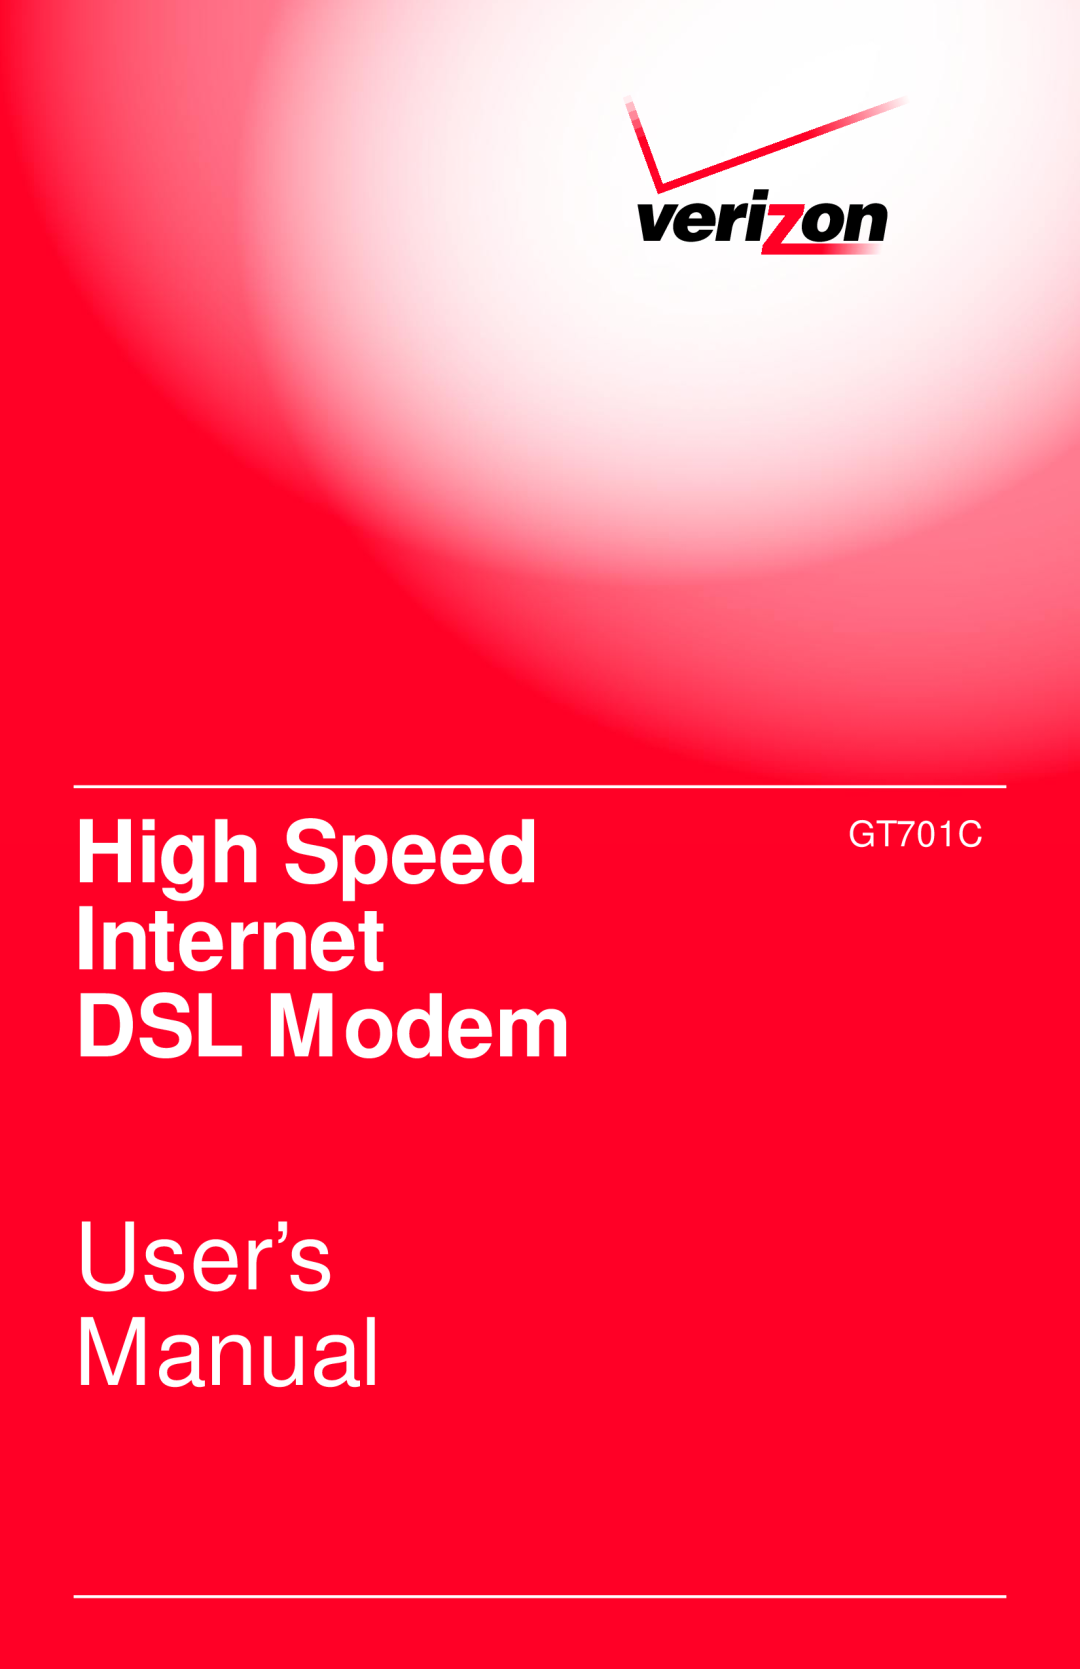 Verizon GT701C user manual User’s Manual, High Speed, Internet, DSL Modem 